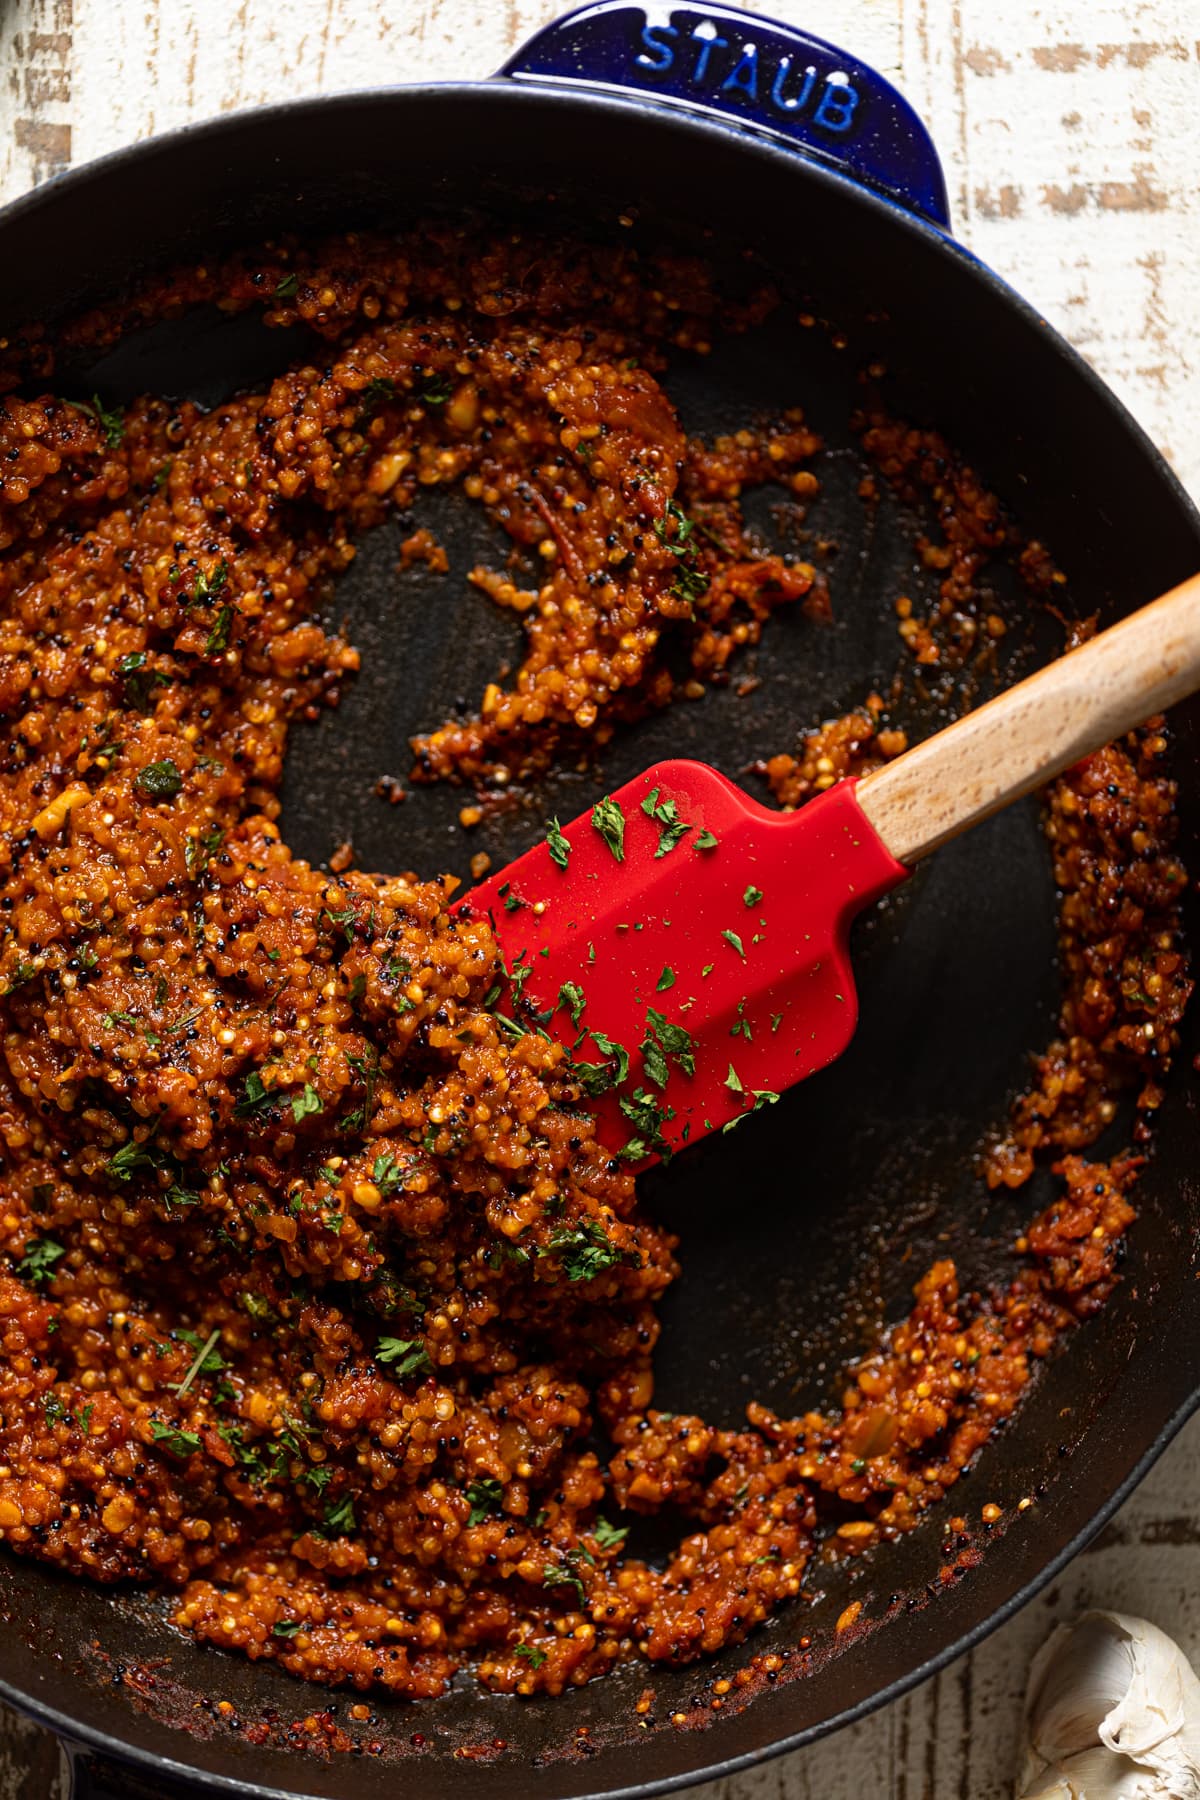 Red spatula in a skillet of seasoned quinoa